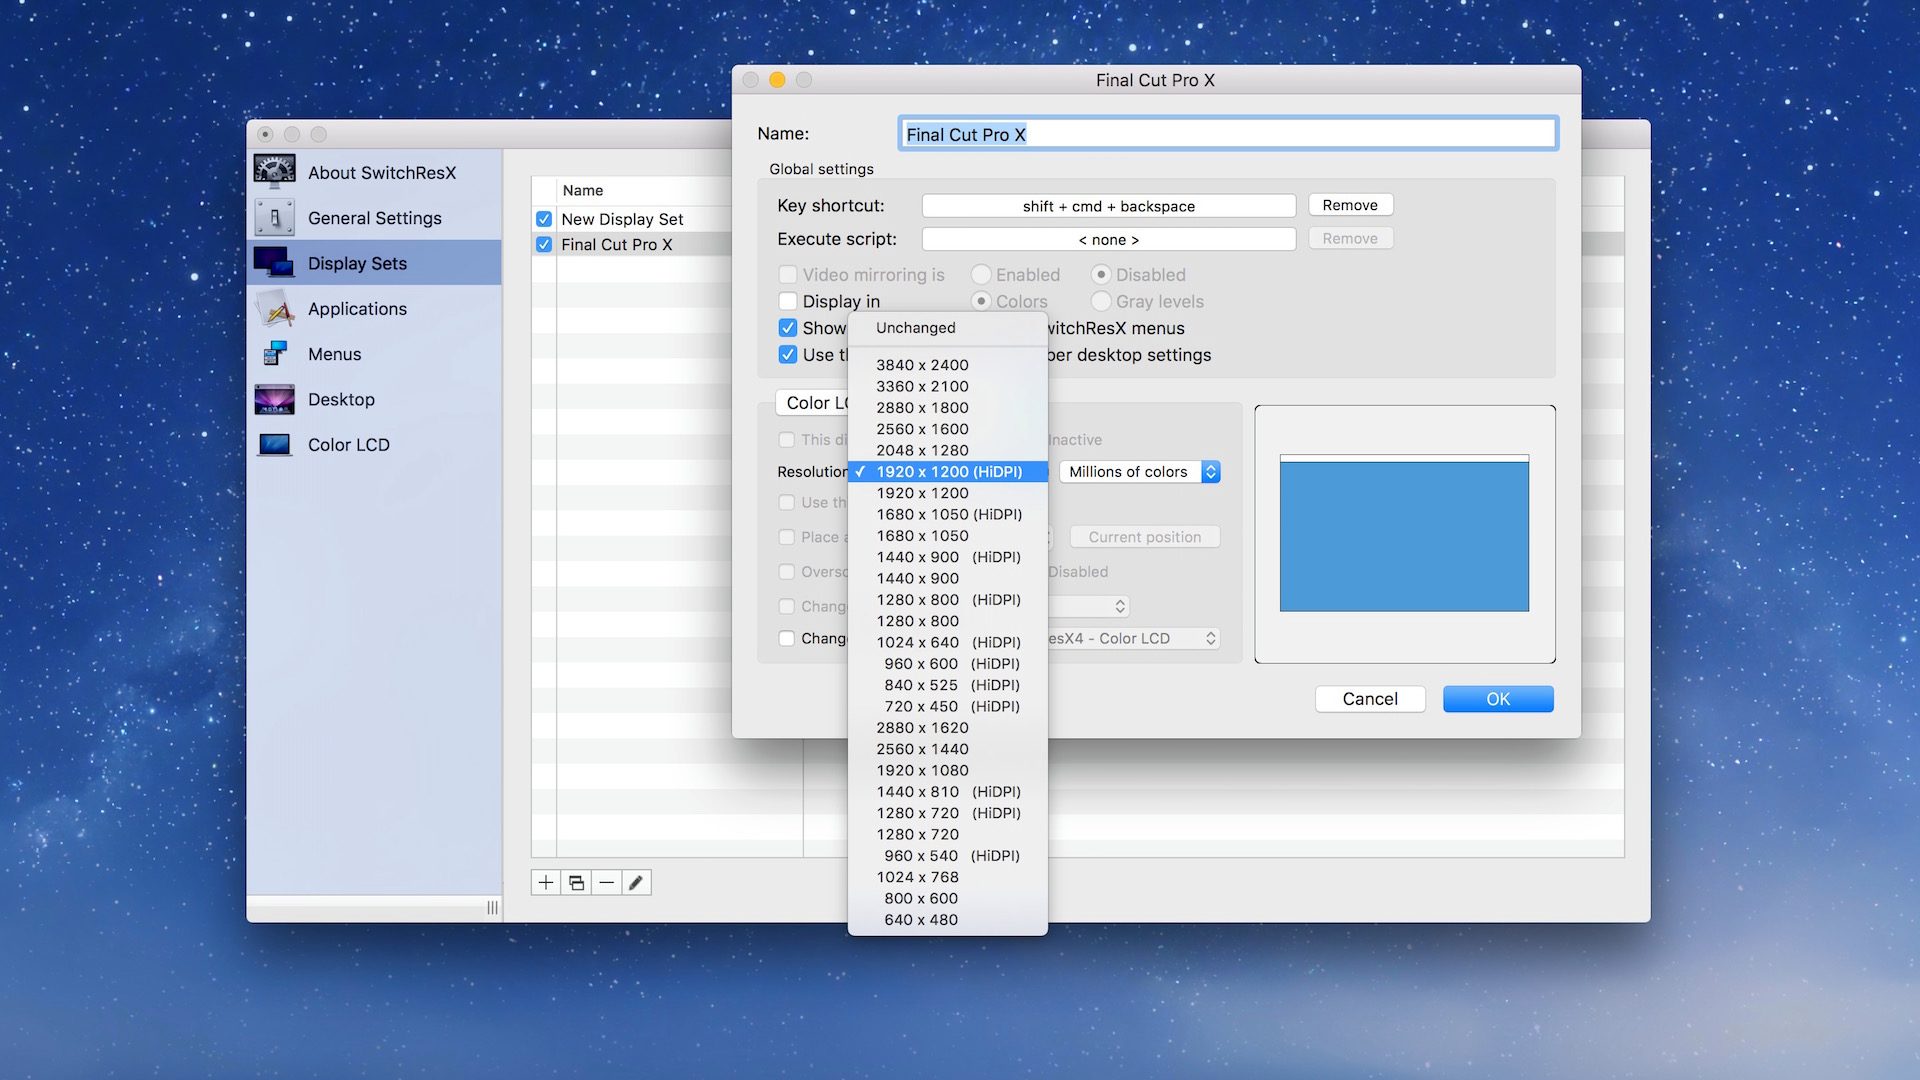 Running mac apps on windows